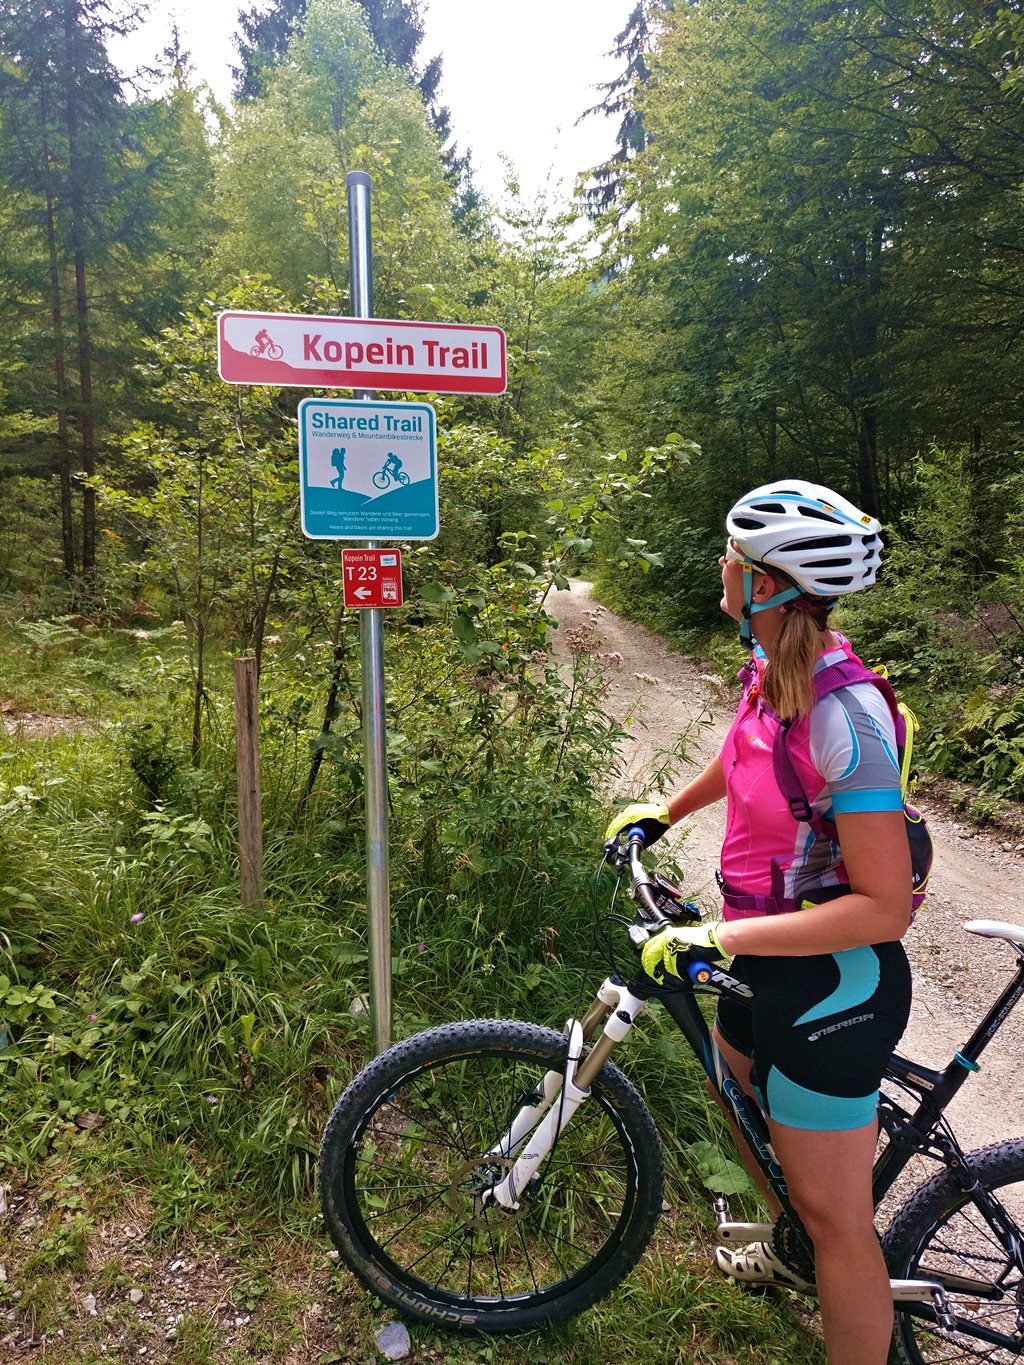 A Kopein Trail